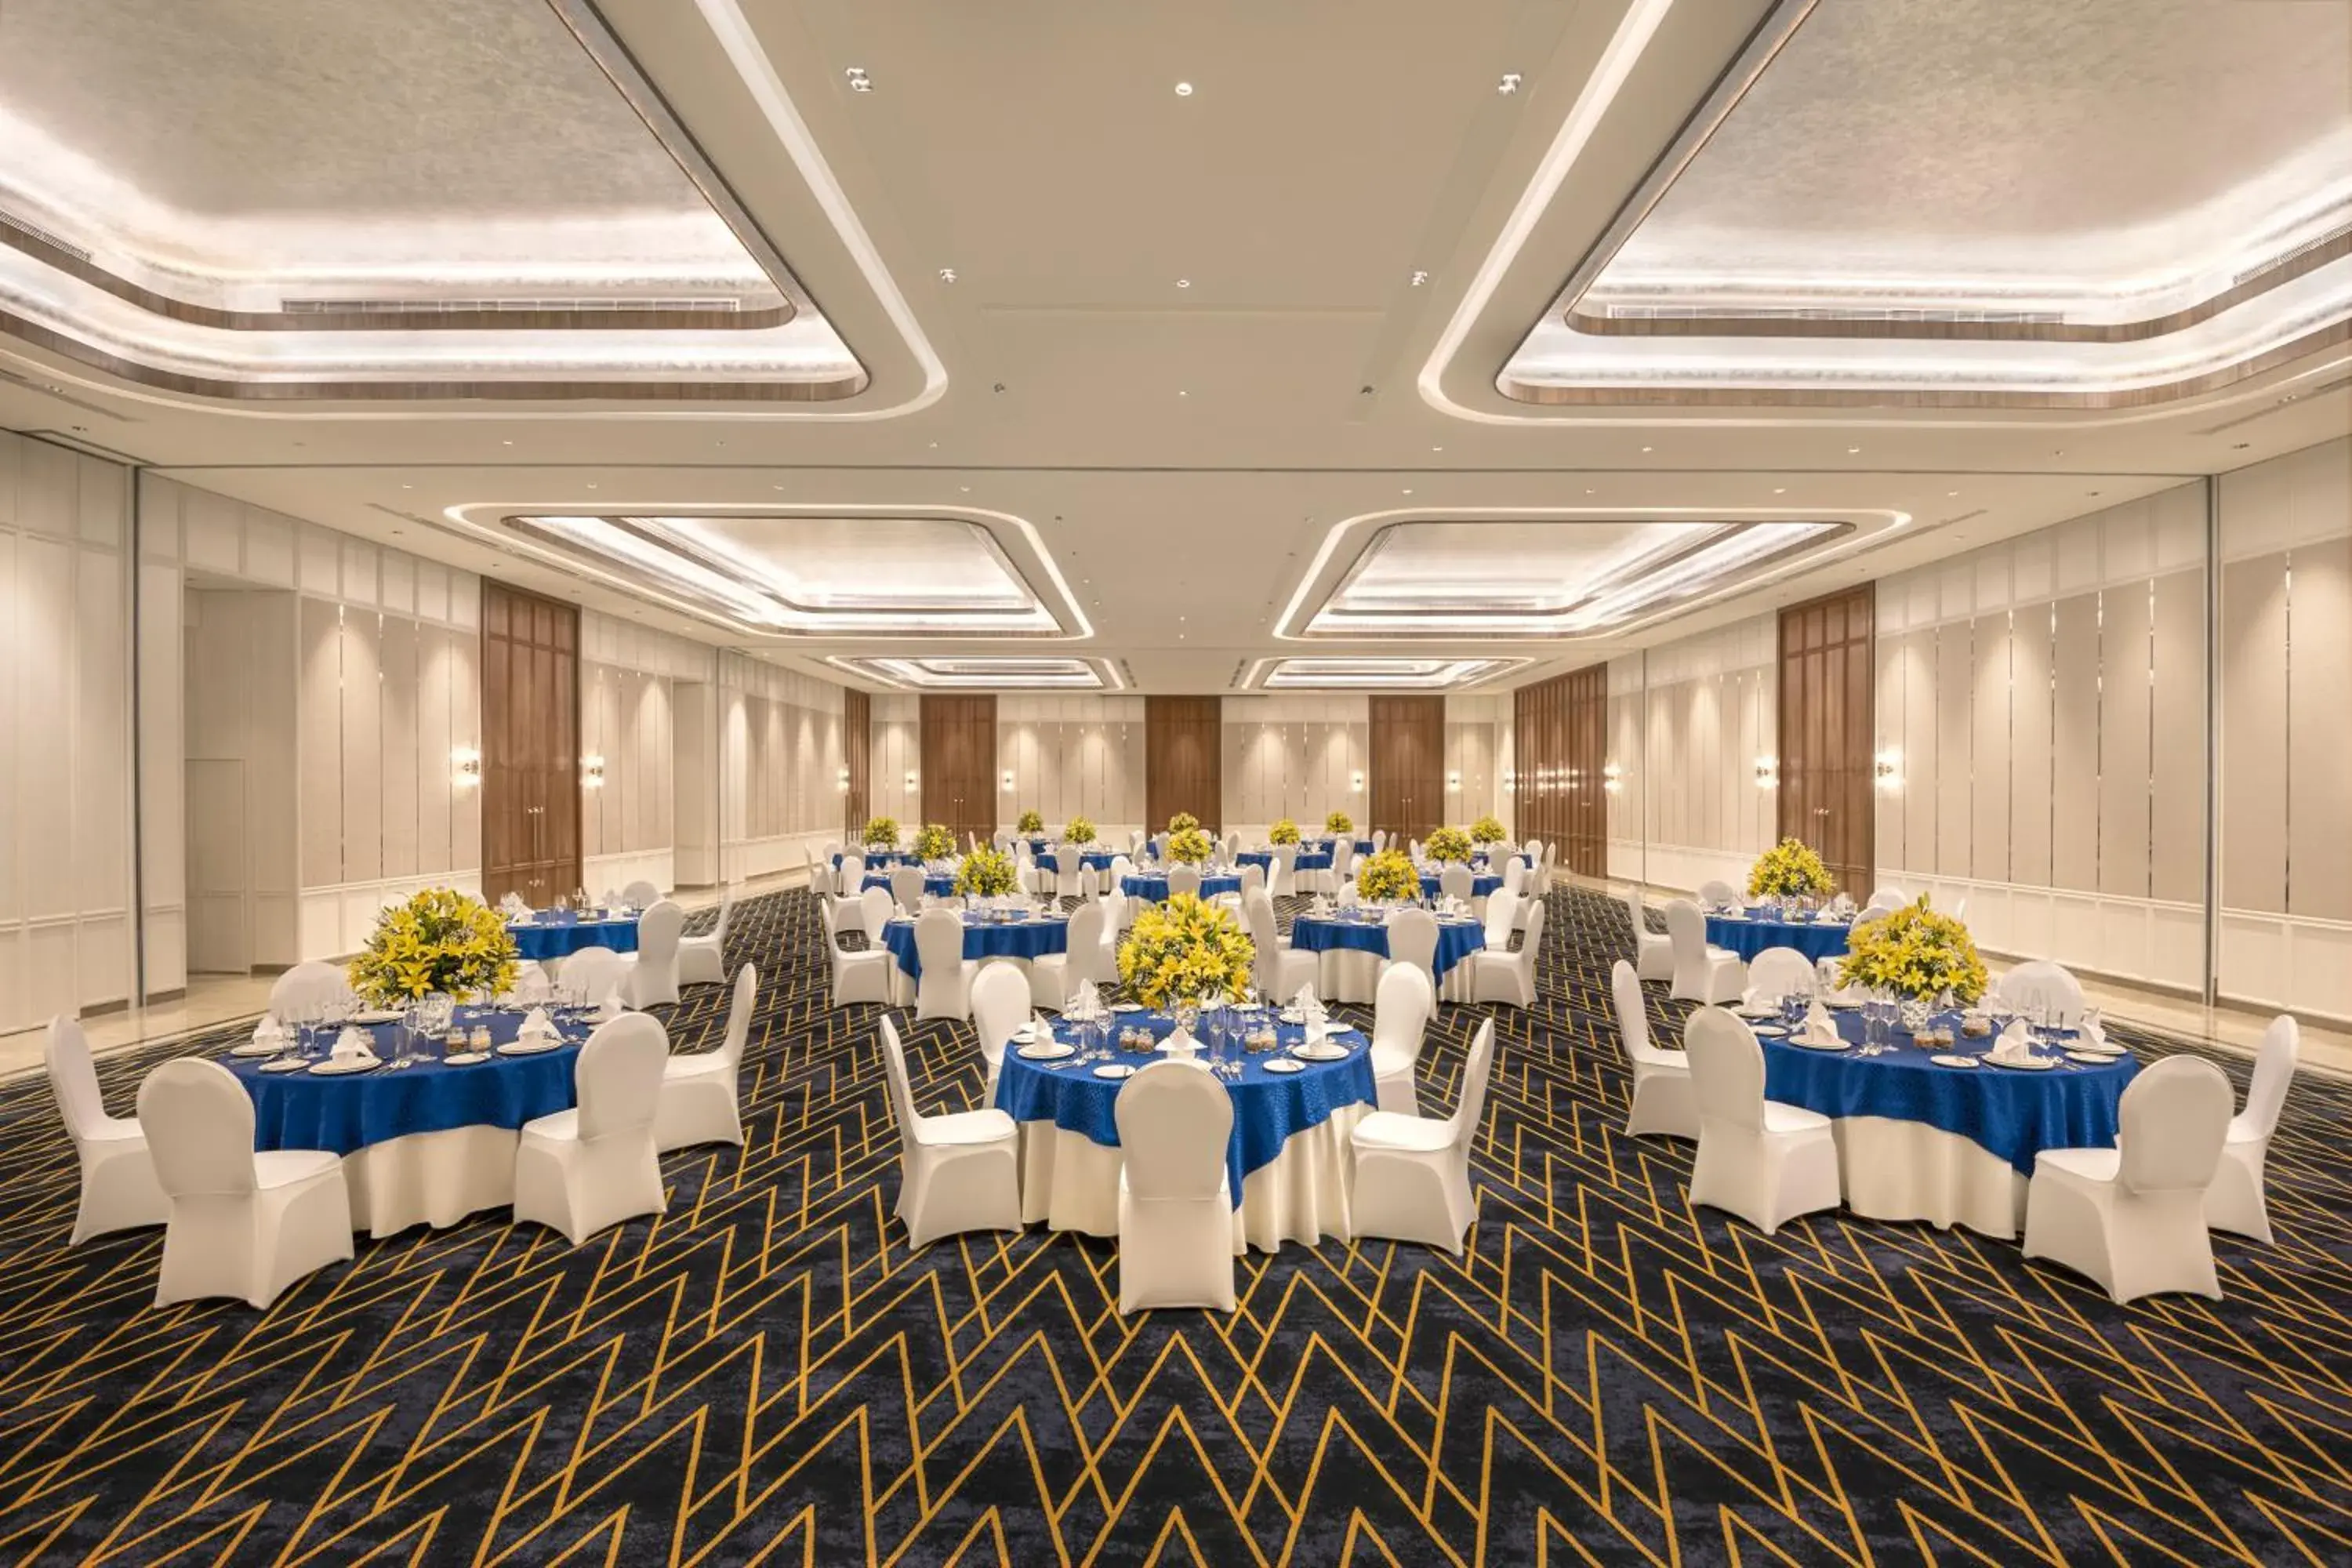 Banquet/Function facilities, Banquet Facilities in Aurika, Mumbai Skycity